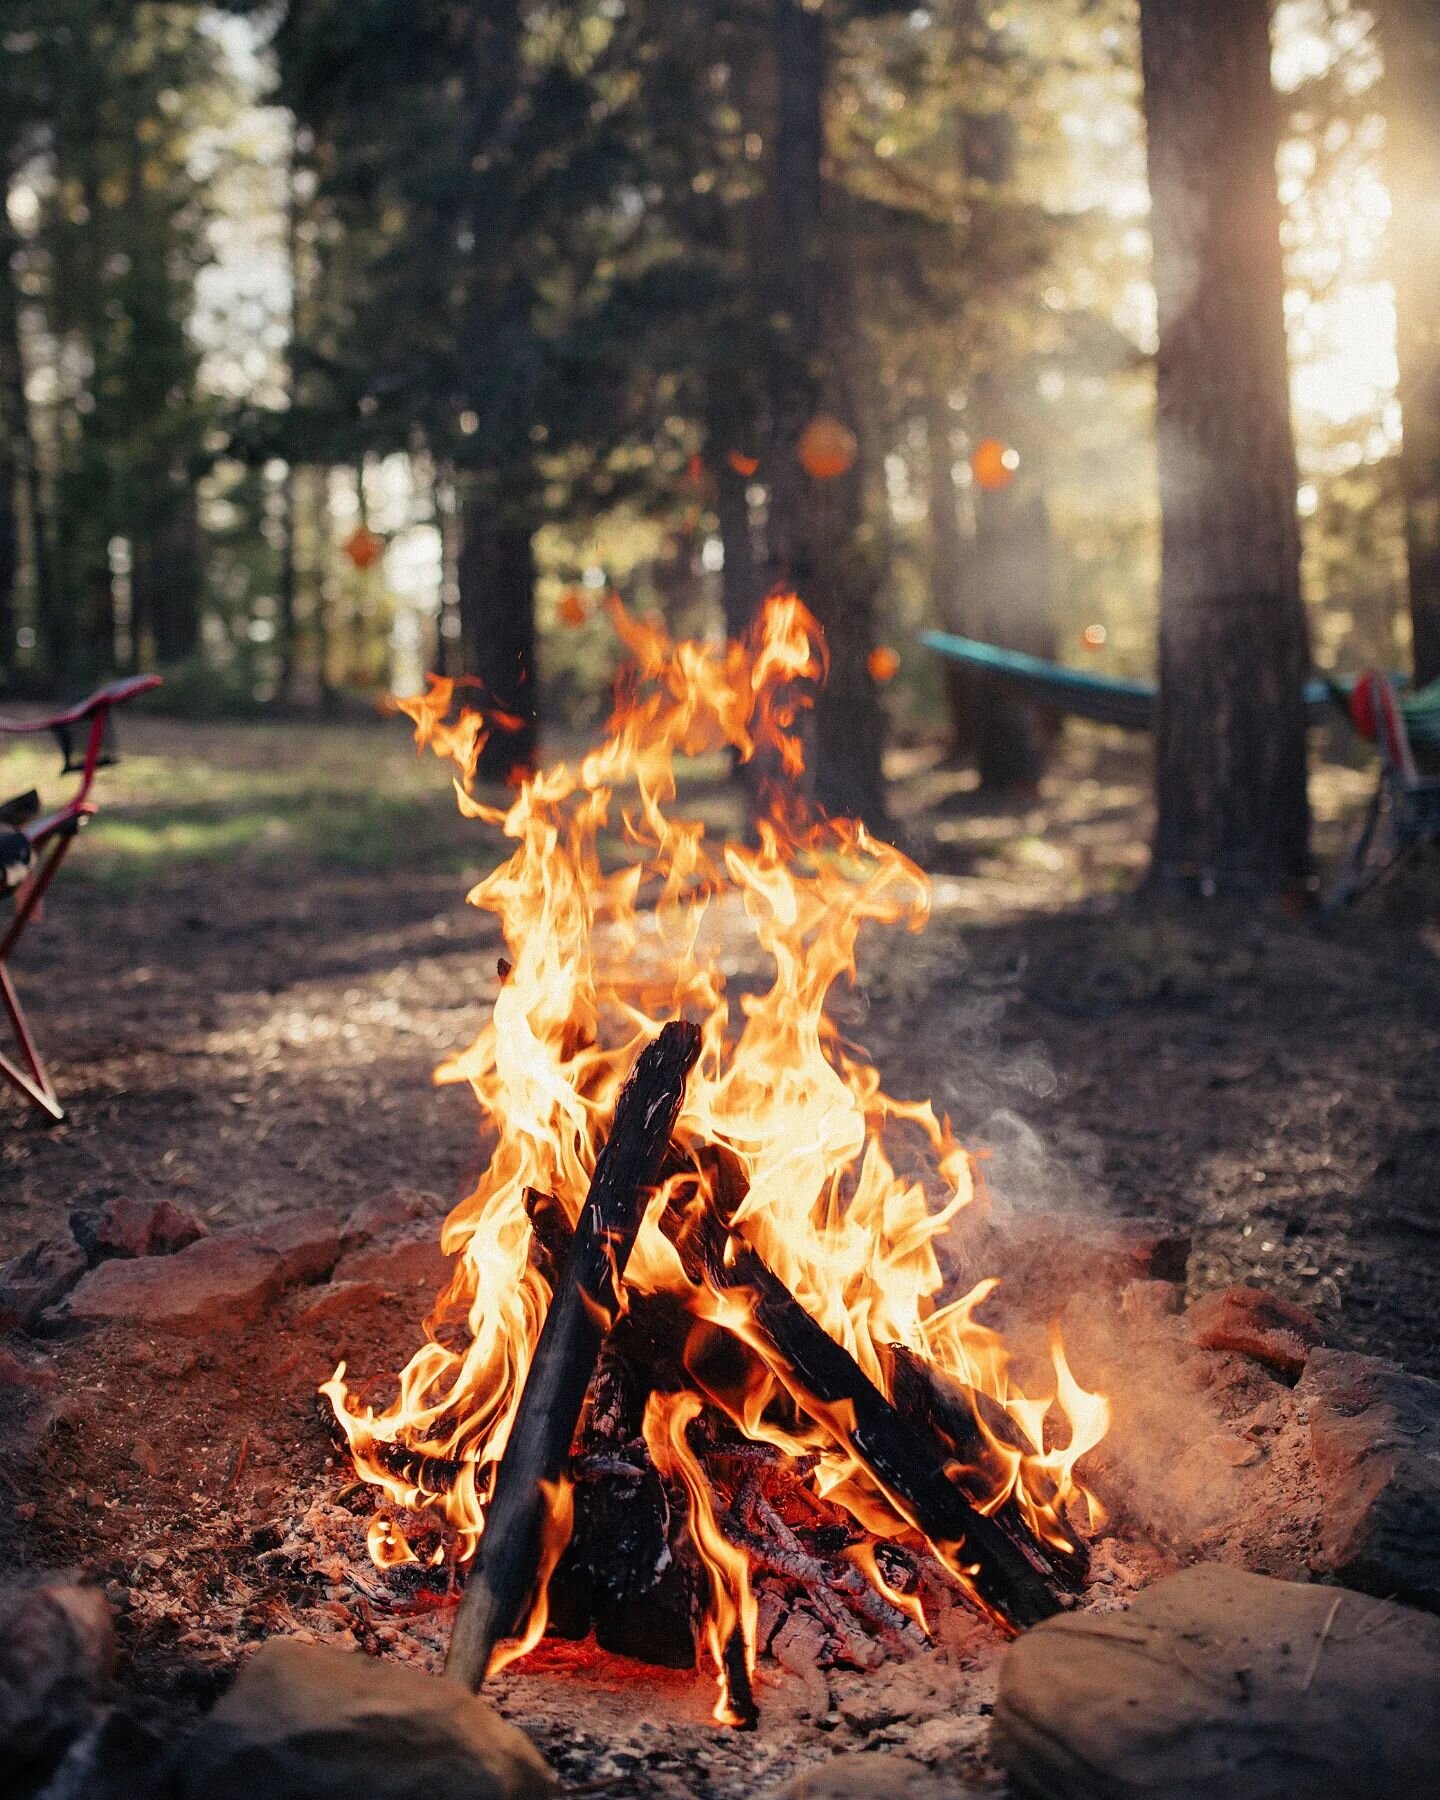 🏕
.
.
.
#camping #campfire #forest #outdoor #outdoors #camp #arizona #mogollonrim #azphotographer #lbphotocinema